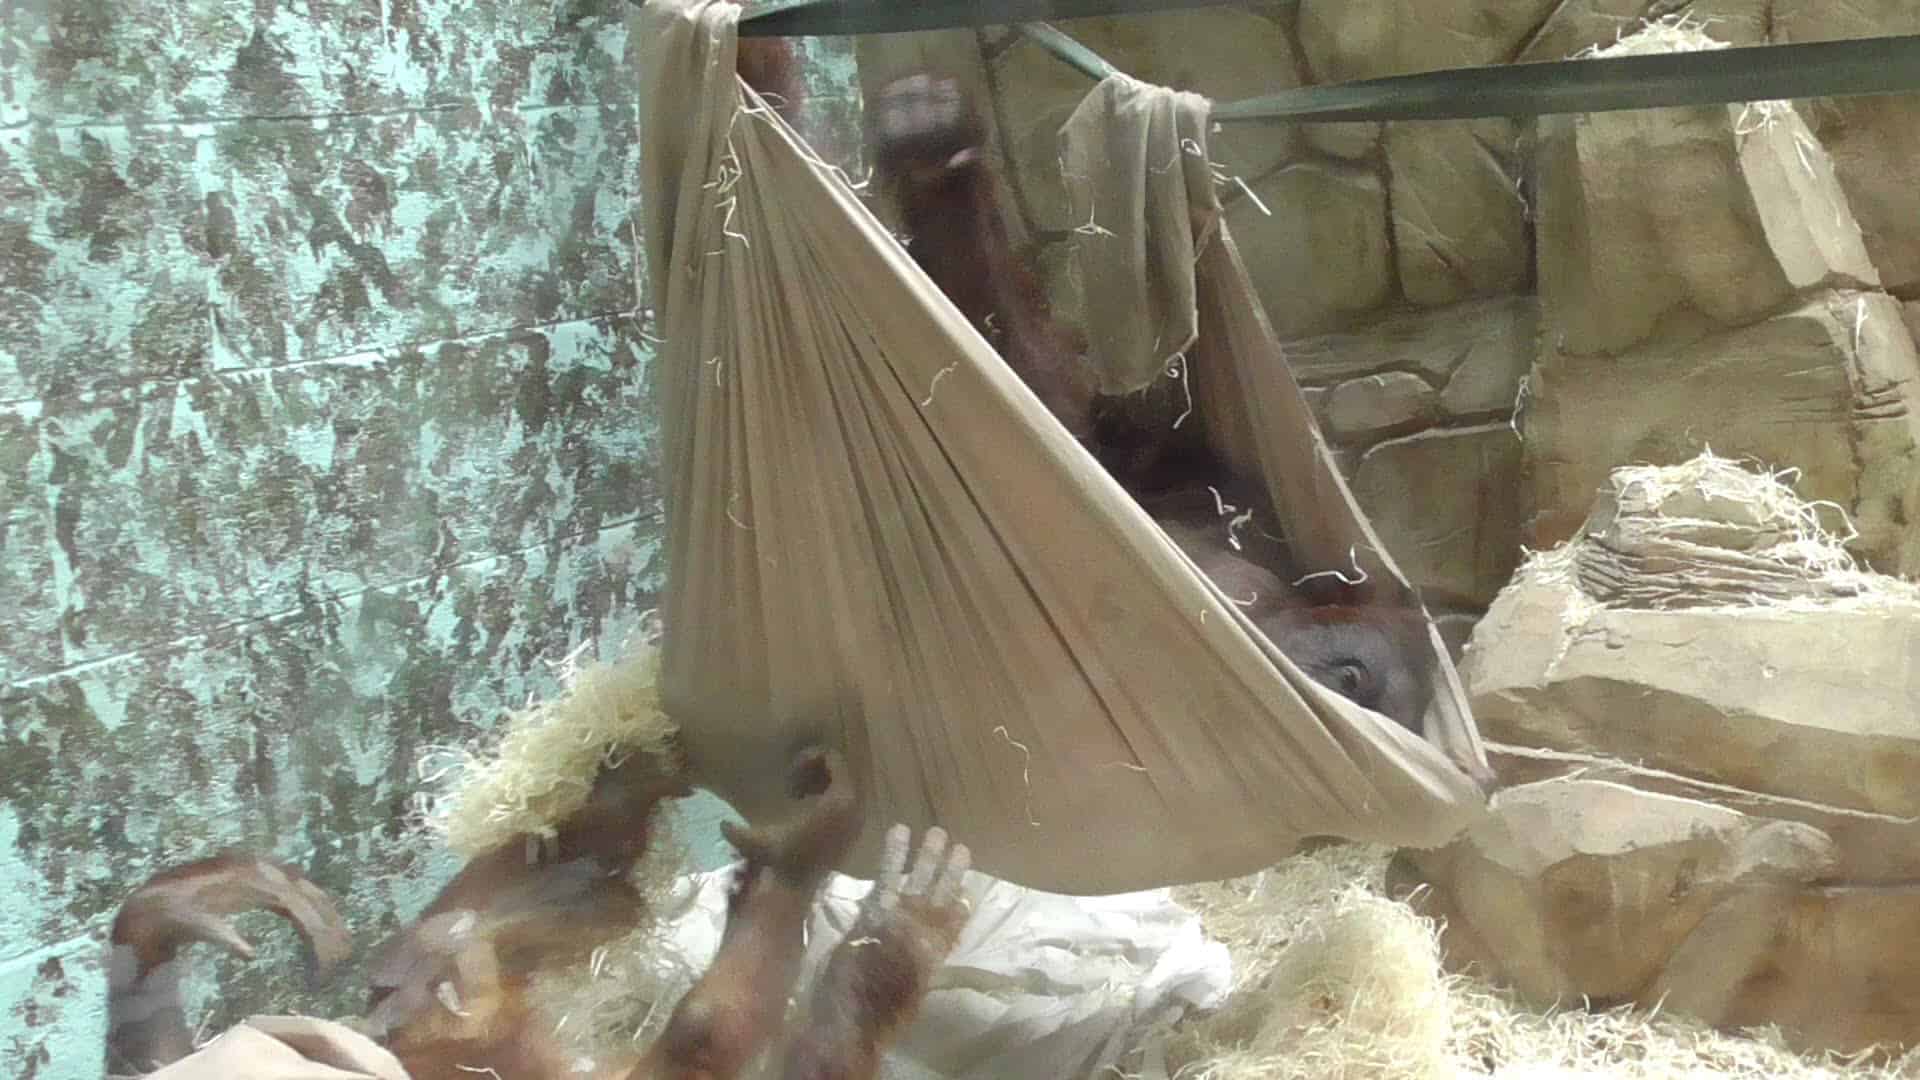 Orangutan builds a hammock